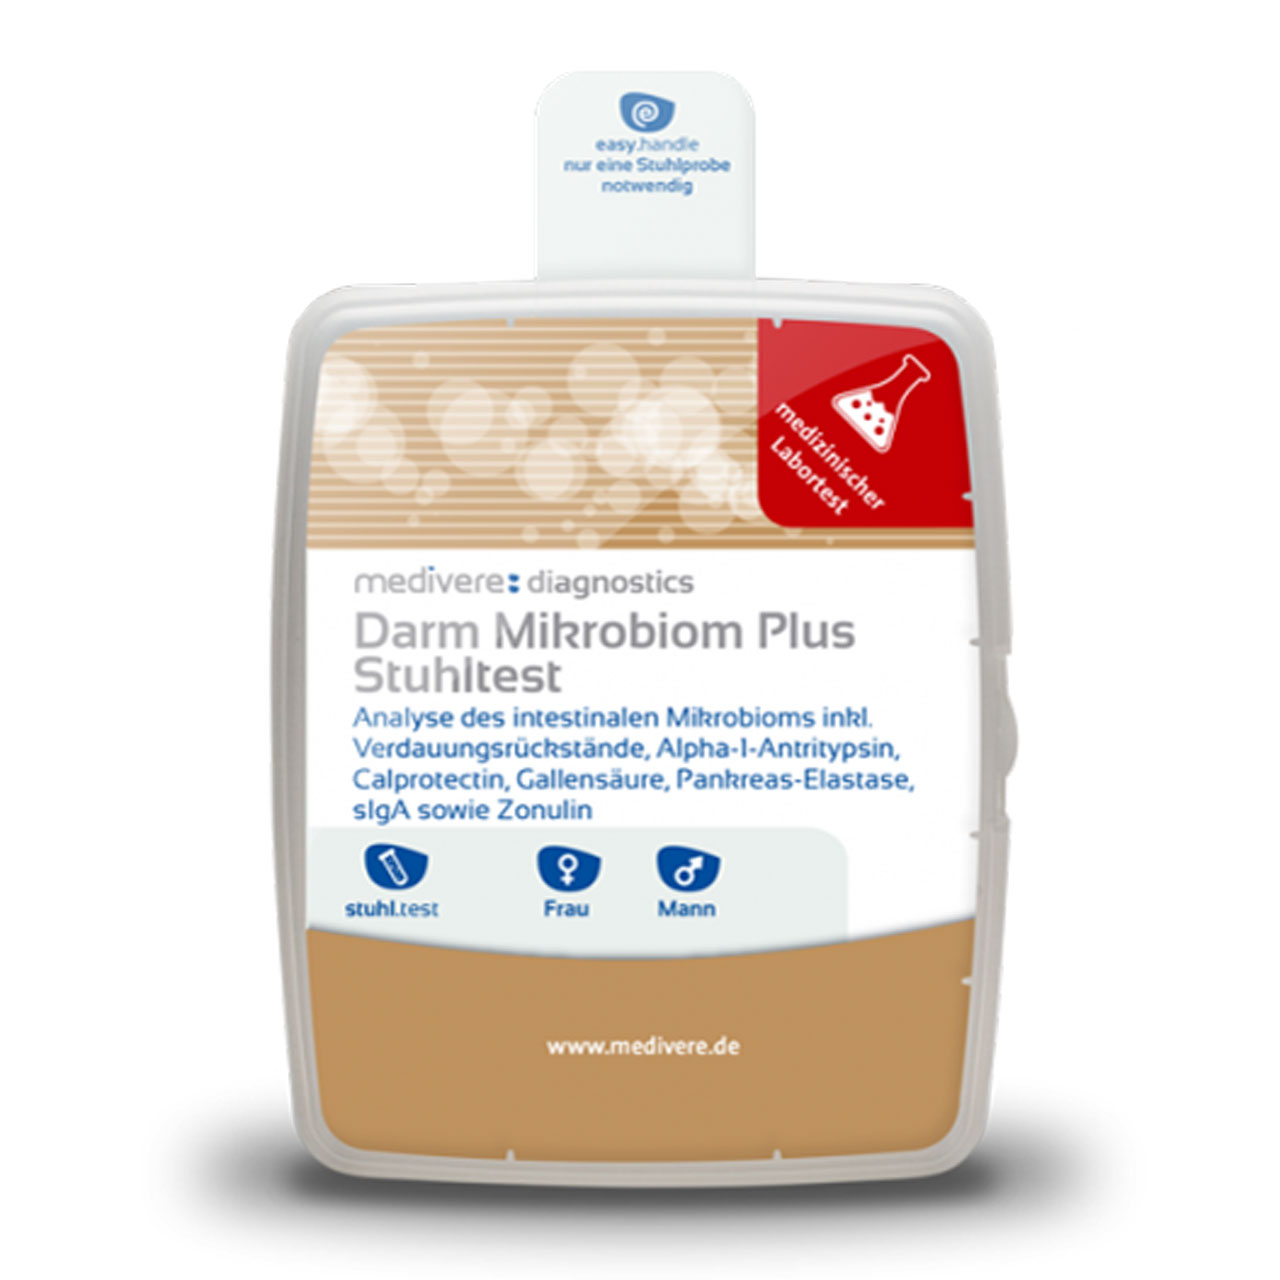 Darm-Mikrobiom Plus Stuhltest von Medivere